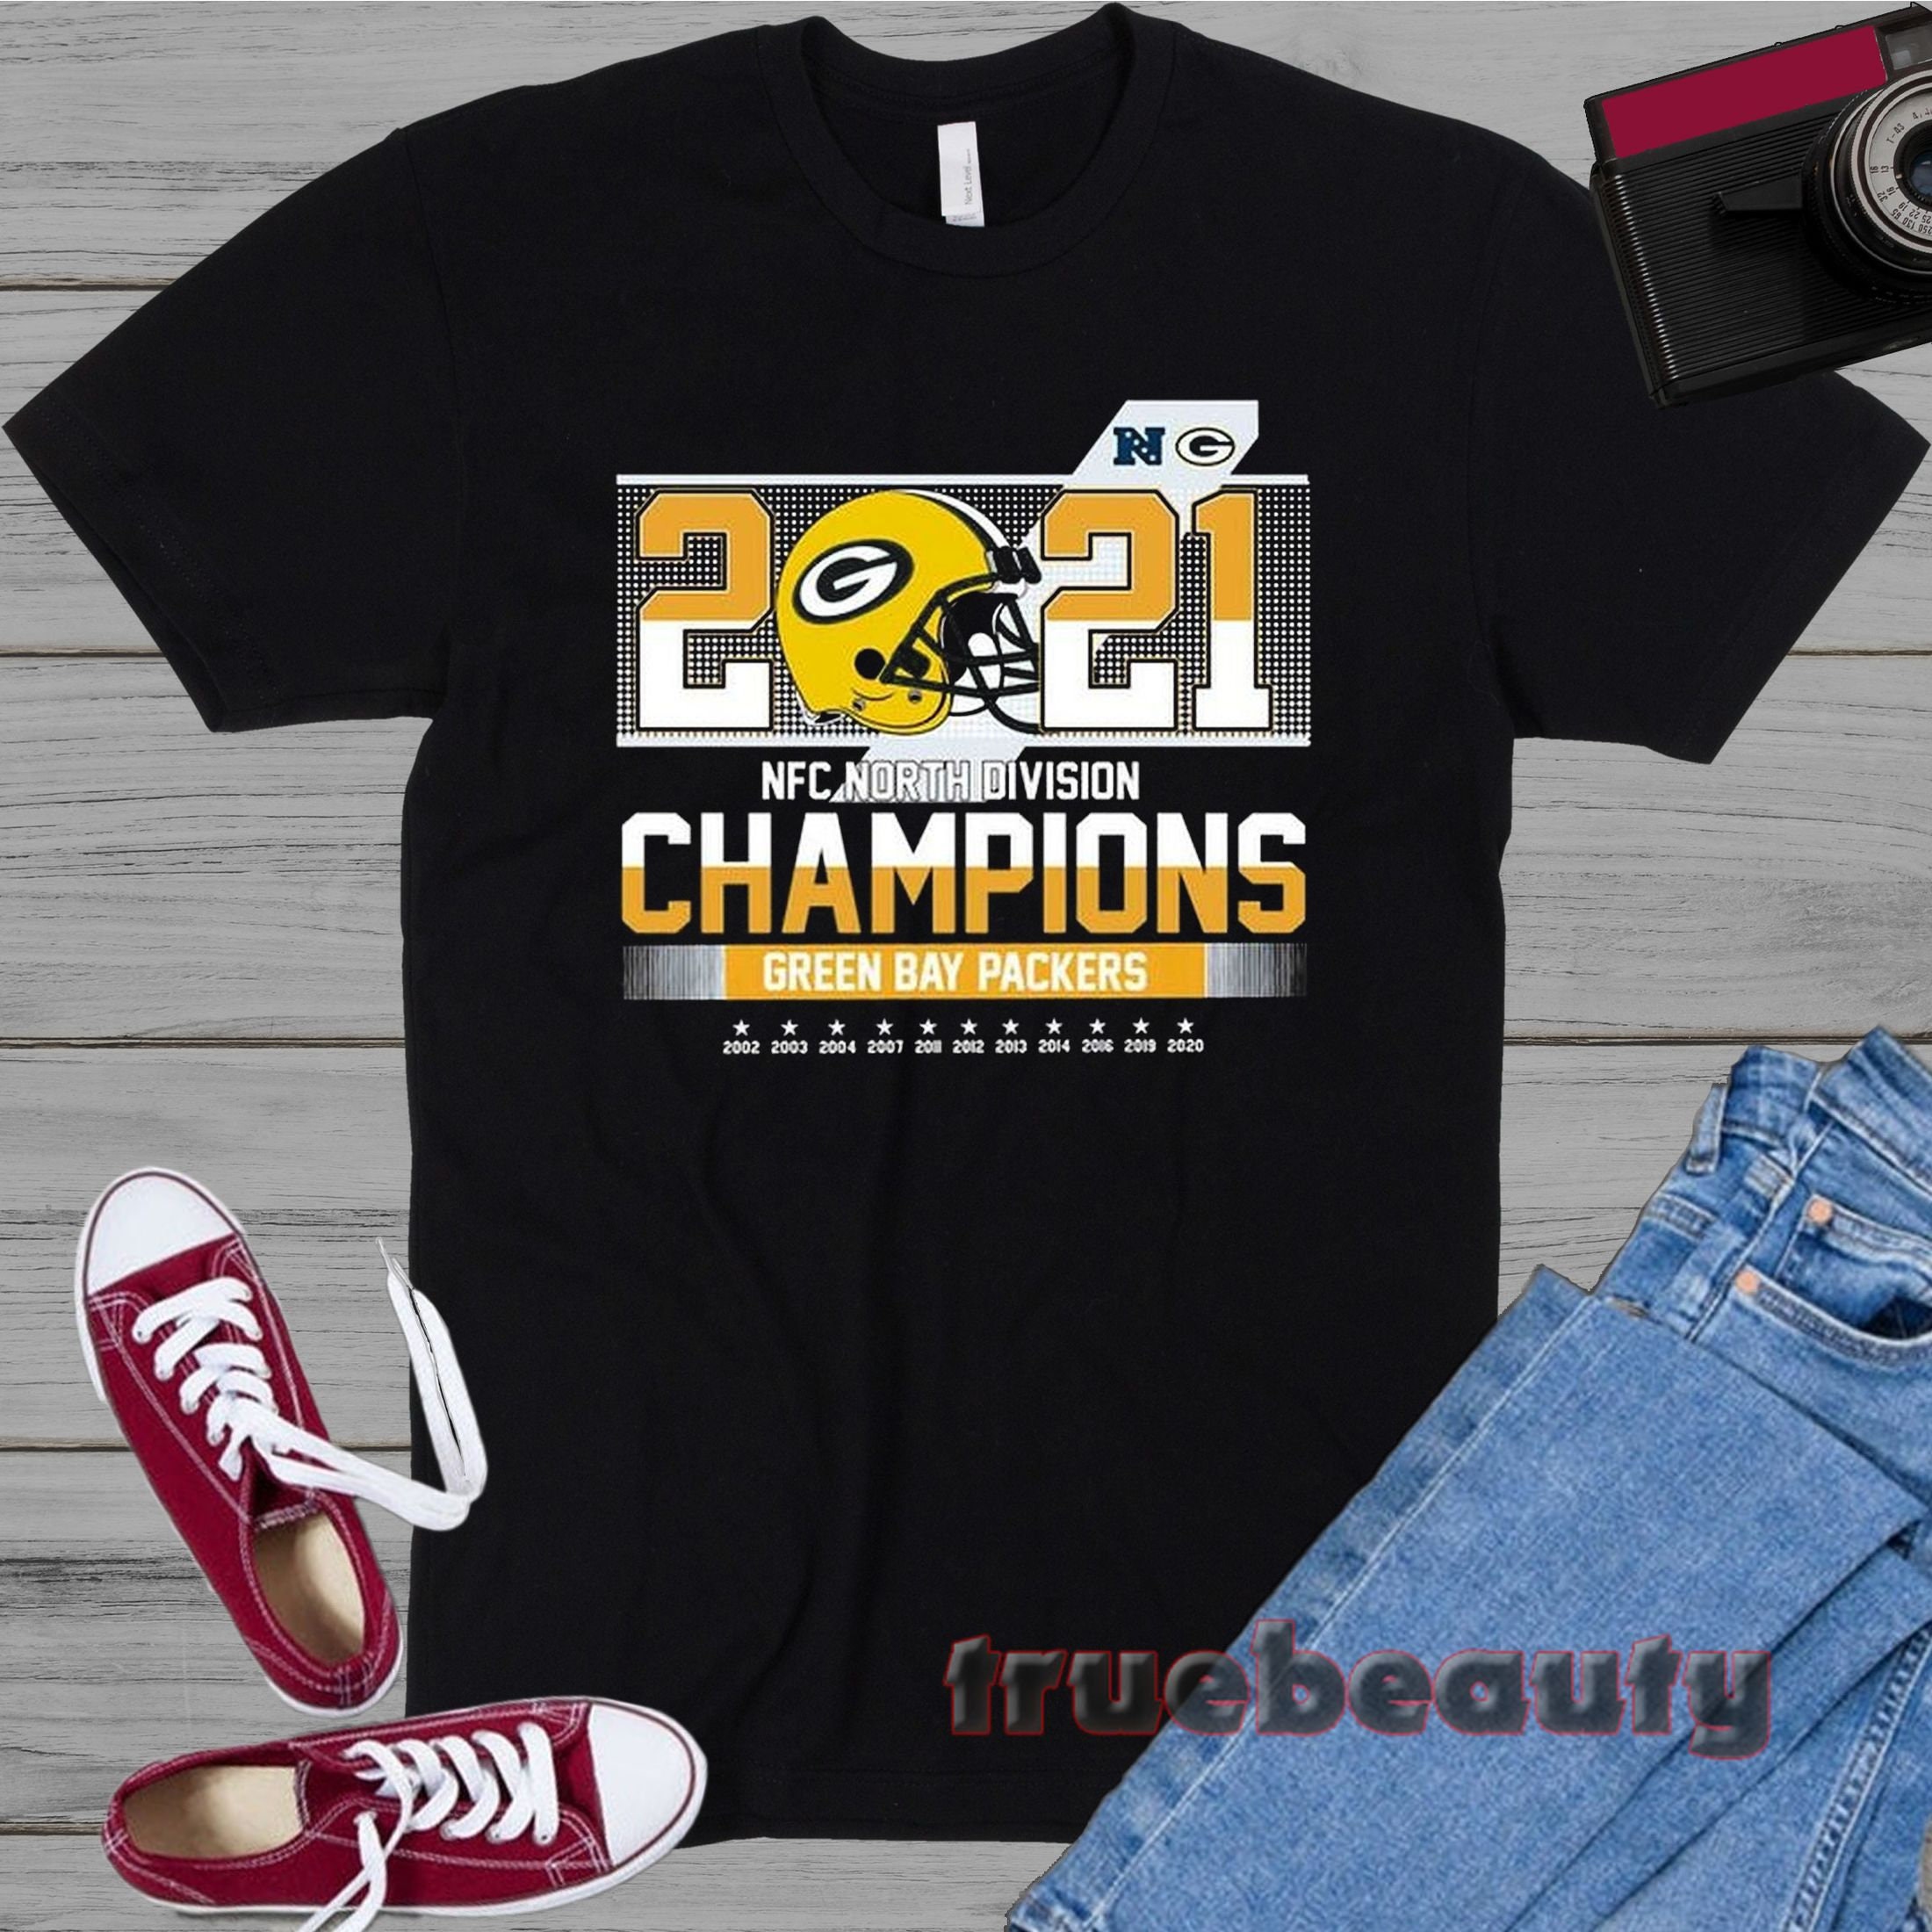 Green Bay Packers 2020 NFC North Division Champions Shirt 2021 - Teeholly